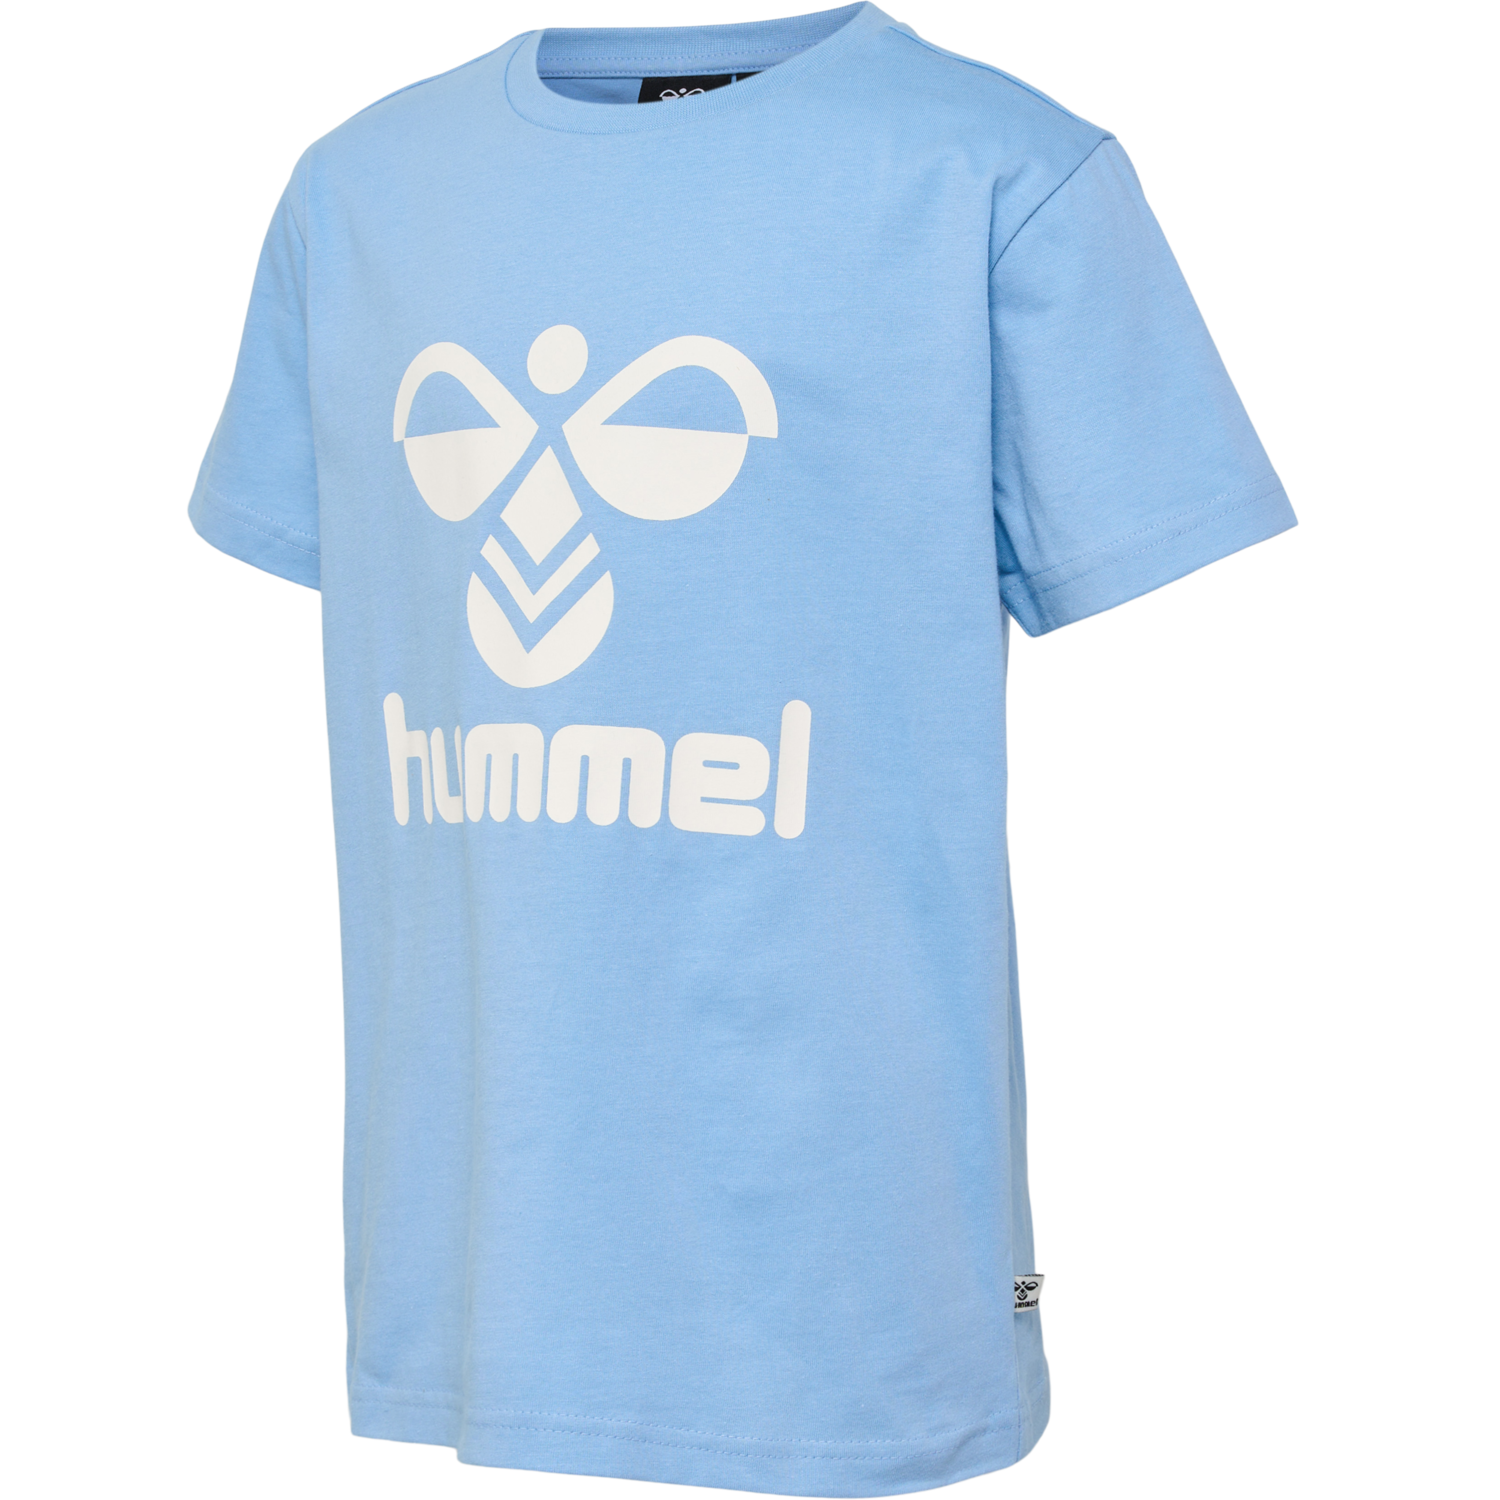 Hummel Hmltres T-Shirt S/S, t-skjorte, barn - AYA SPORT AS